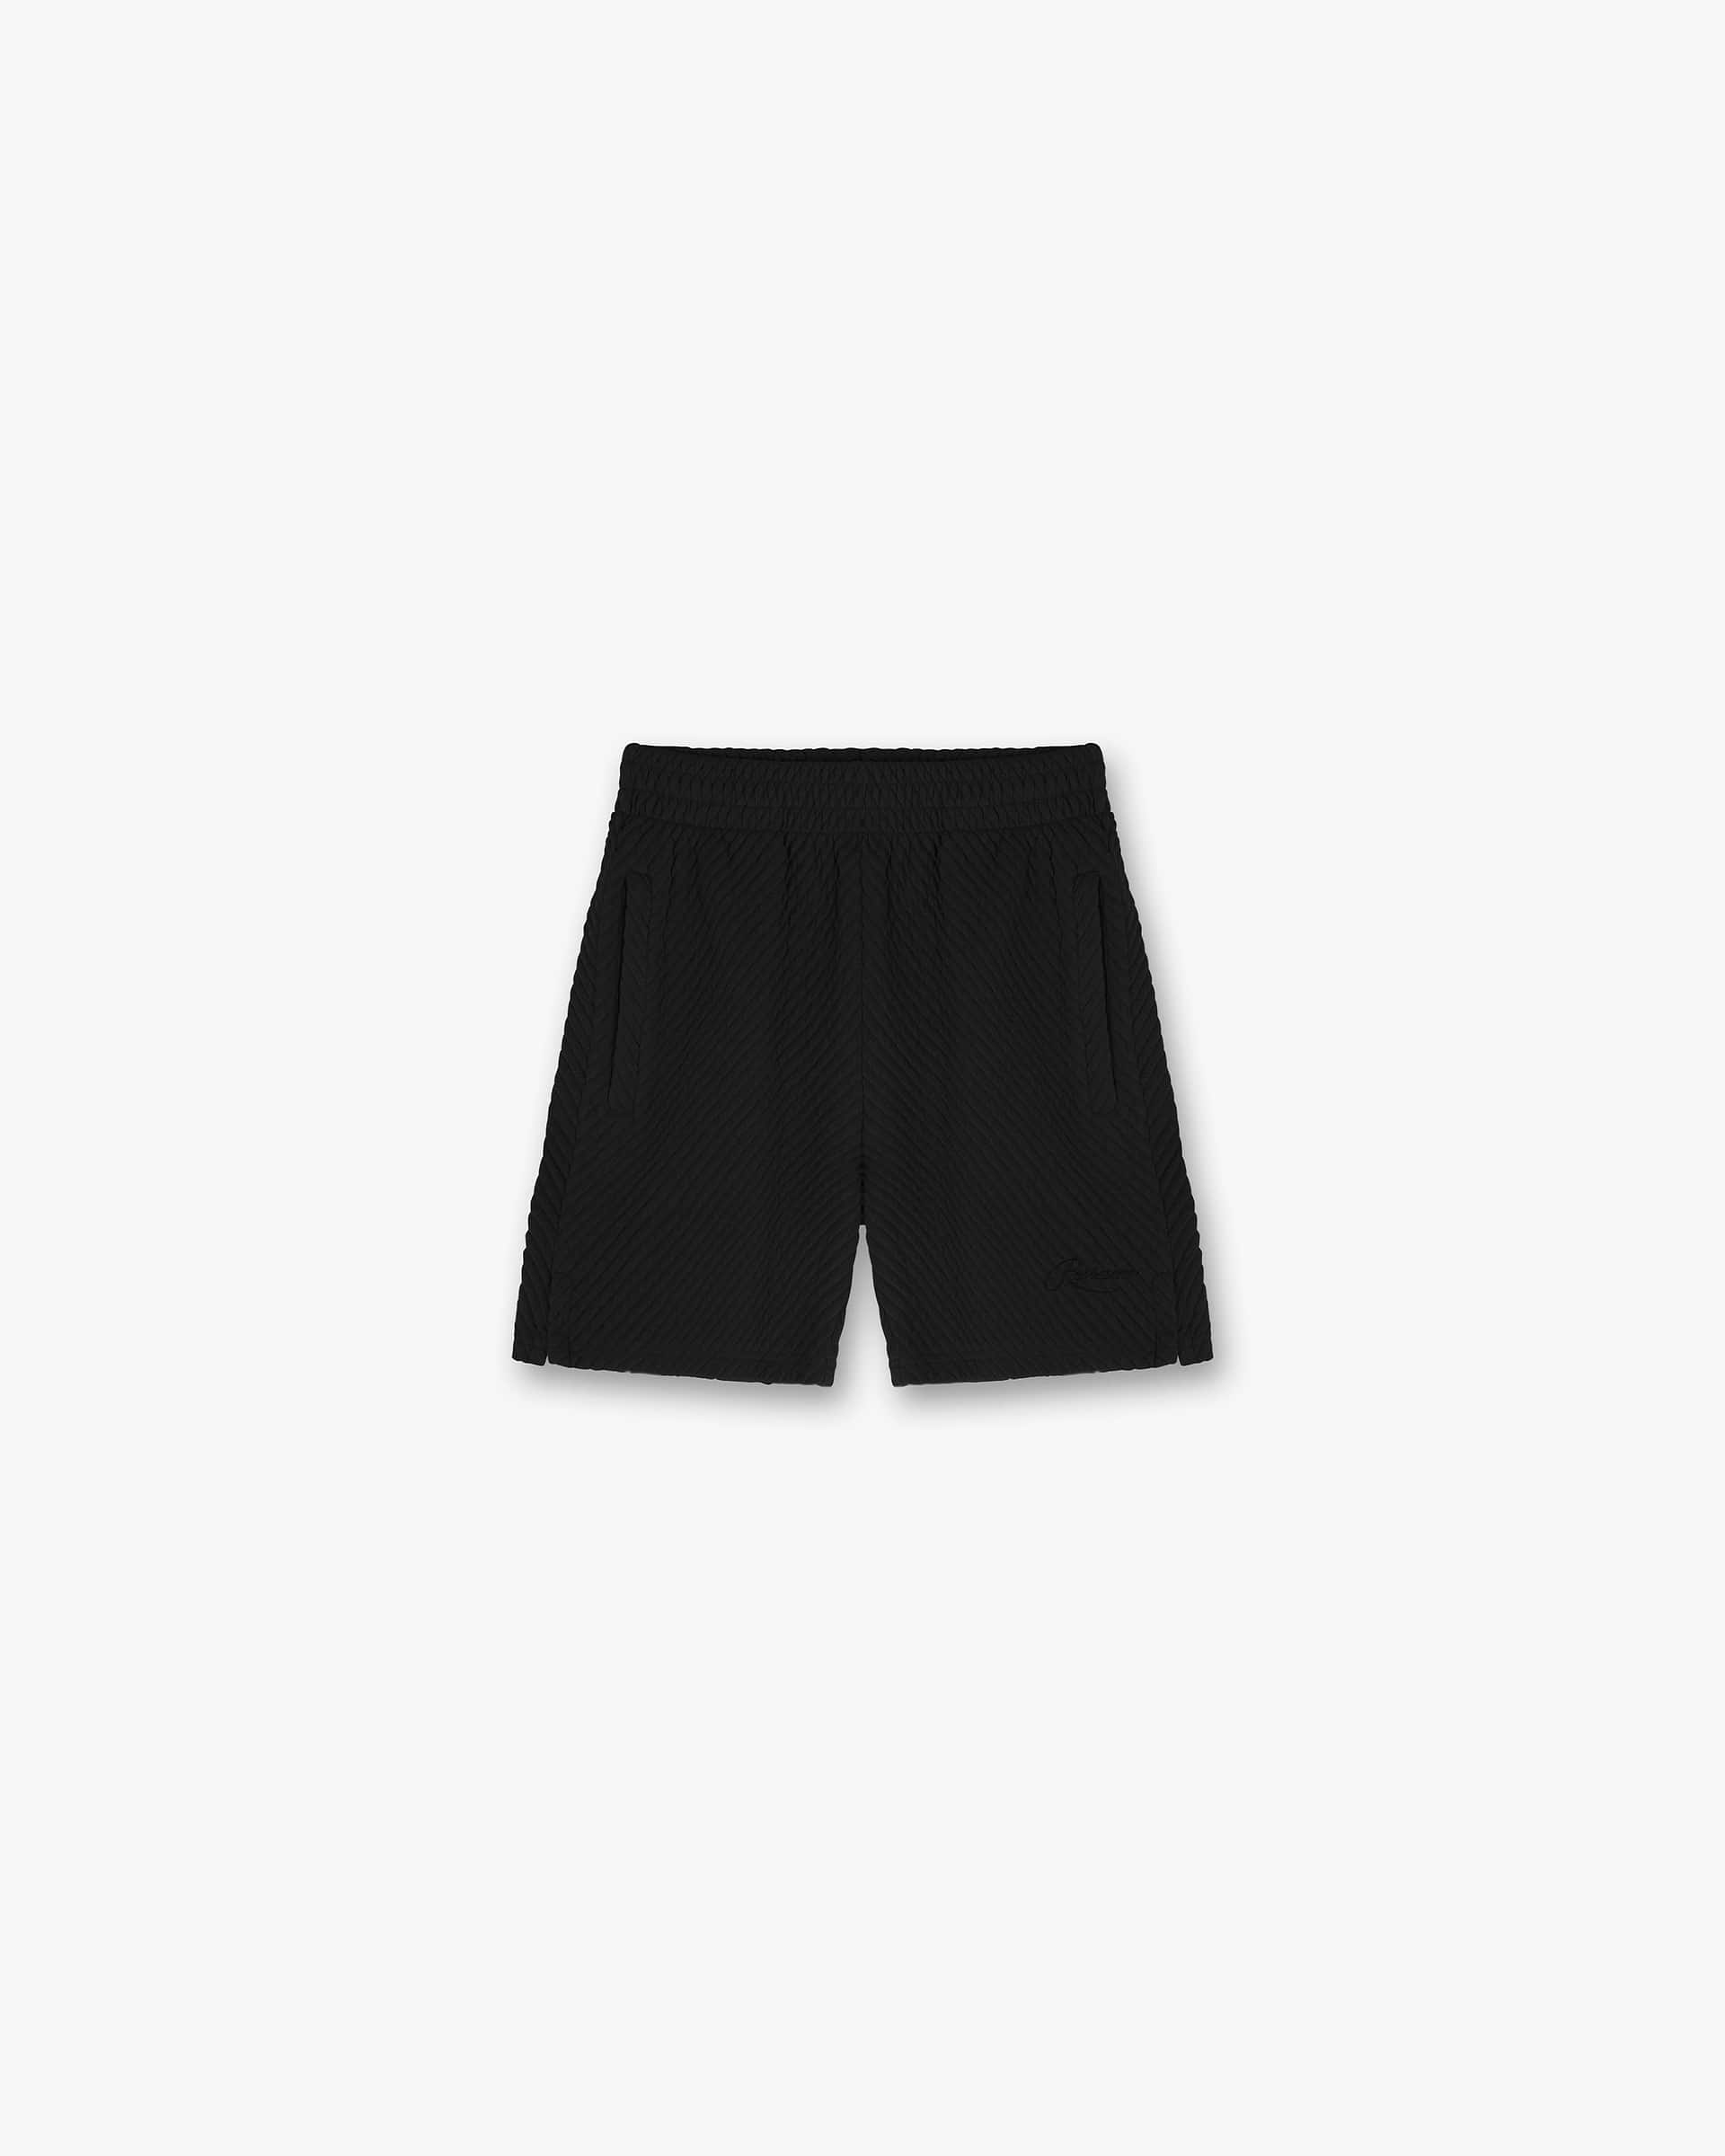 Ottoman Shorts | Black Shorts SC23 | Represent Clo